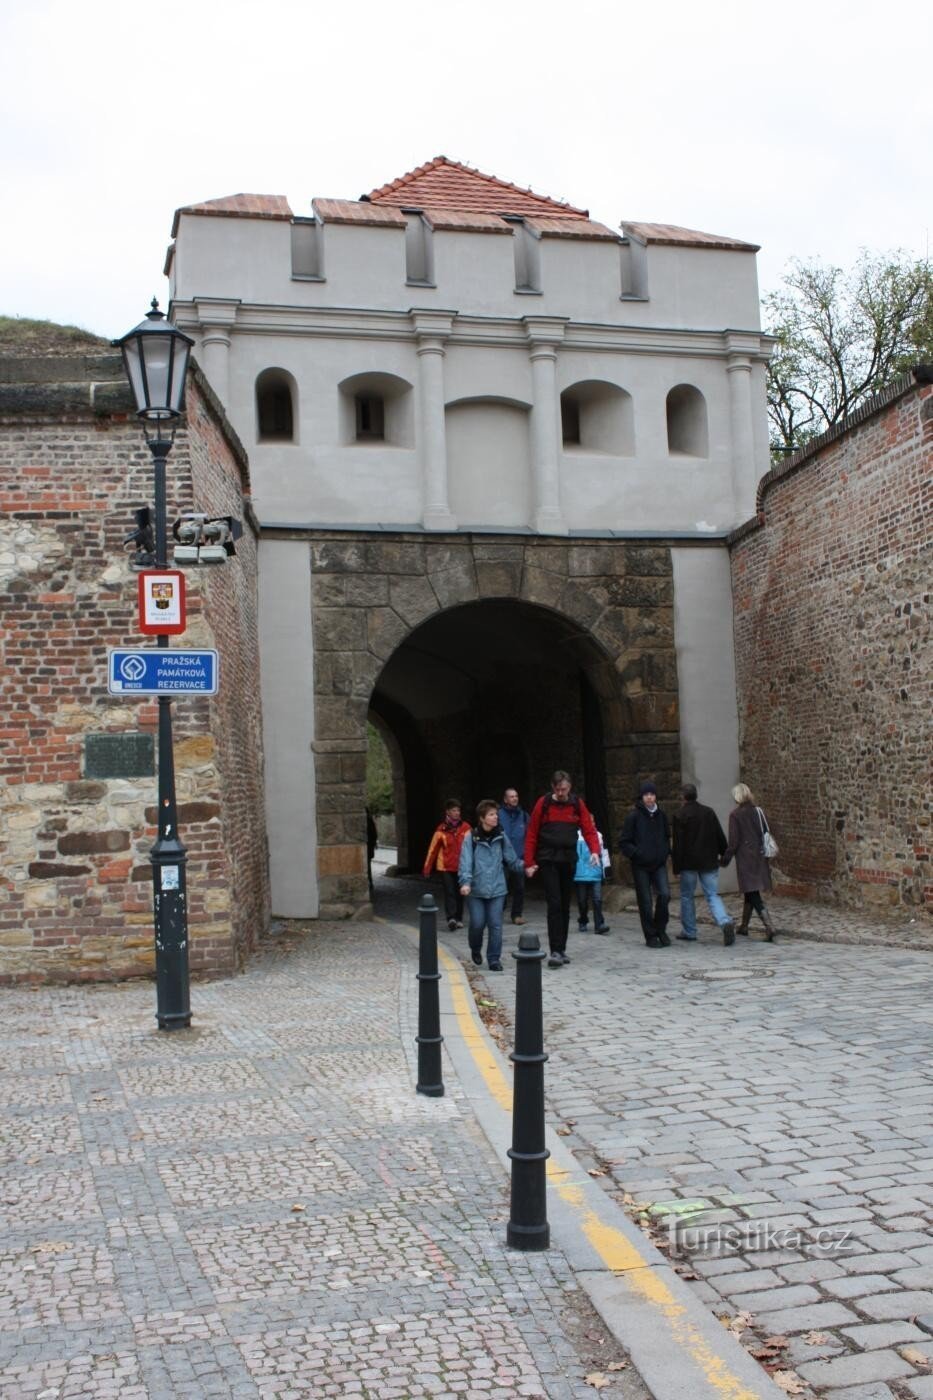 Prague - Táborská brána tại Vyšehrad